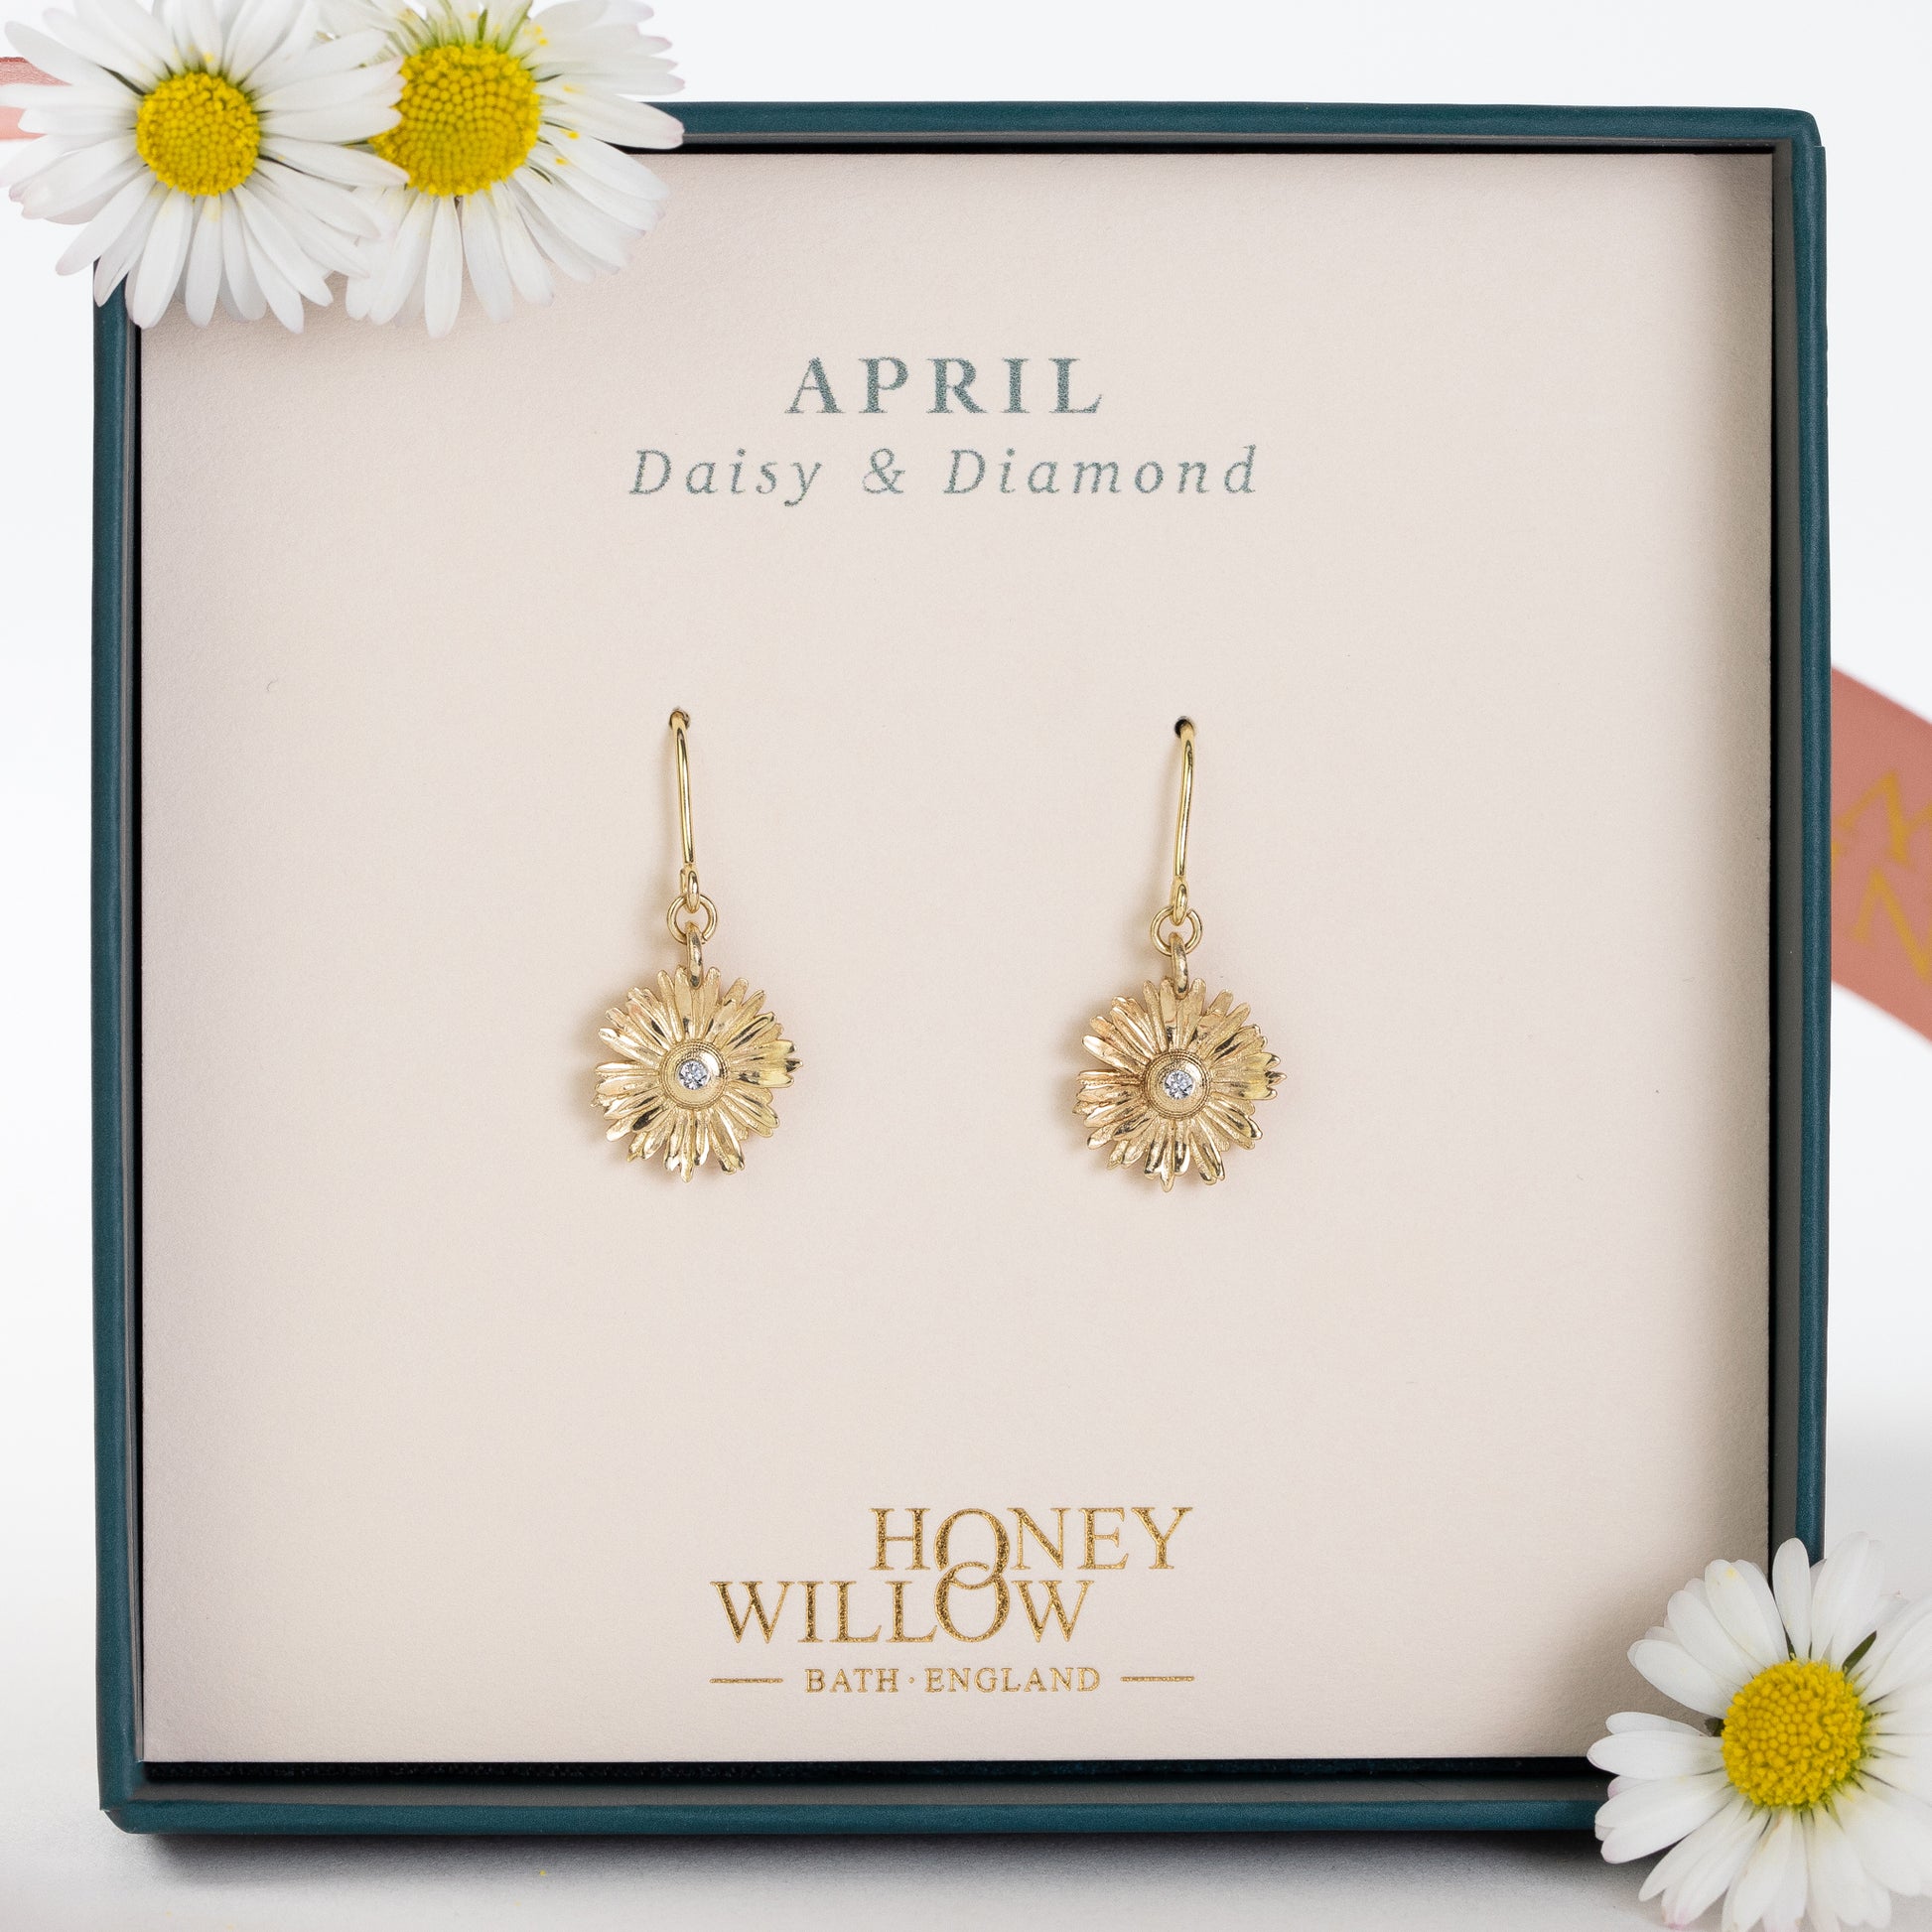 April Birth Flower & Birthstone Earrings - Daisy & Diamond - 9kt Gold